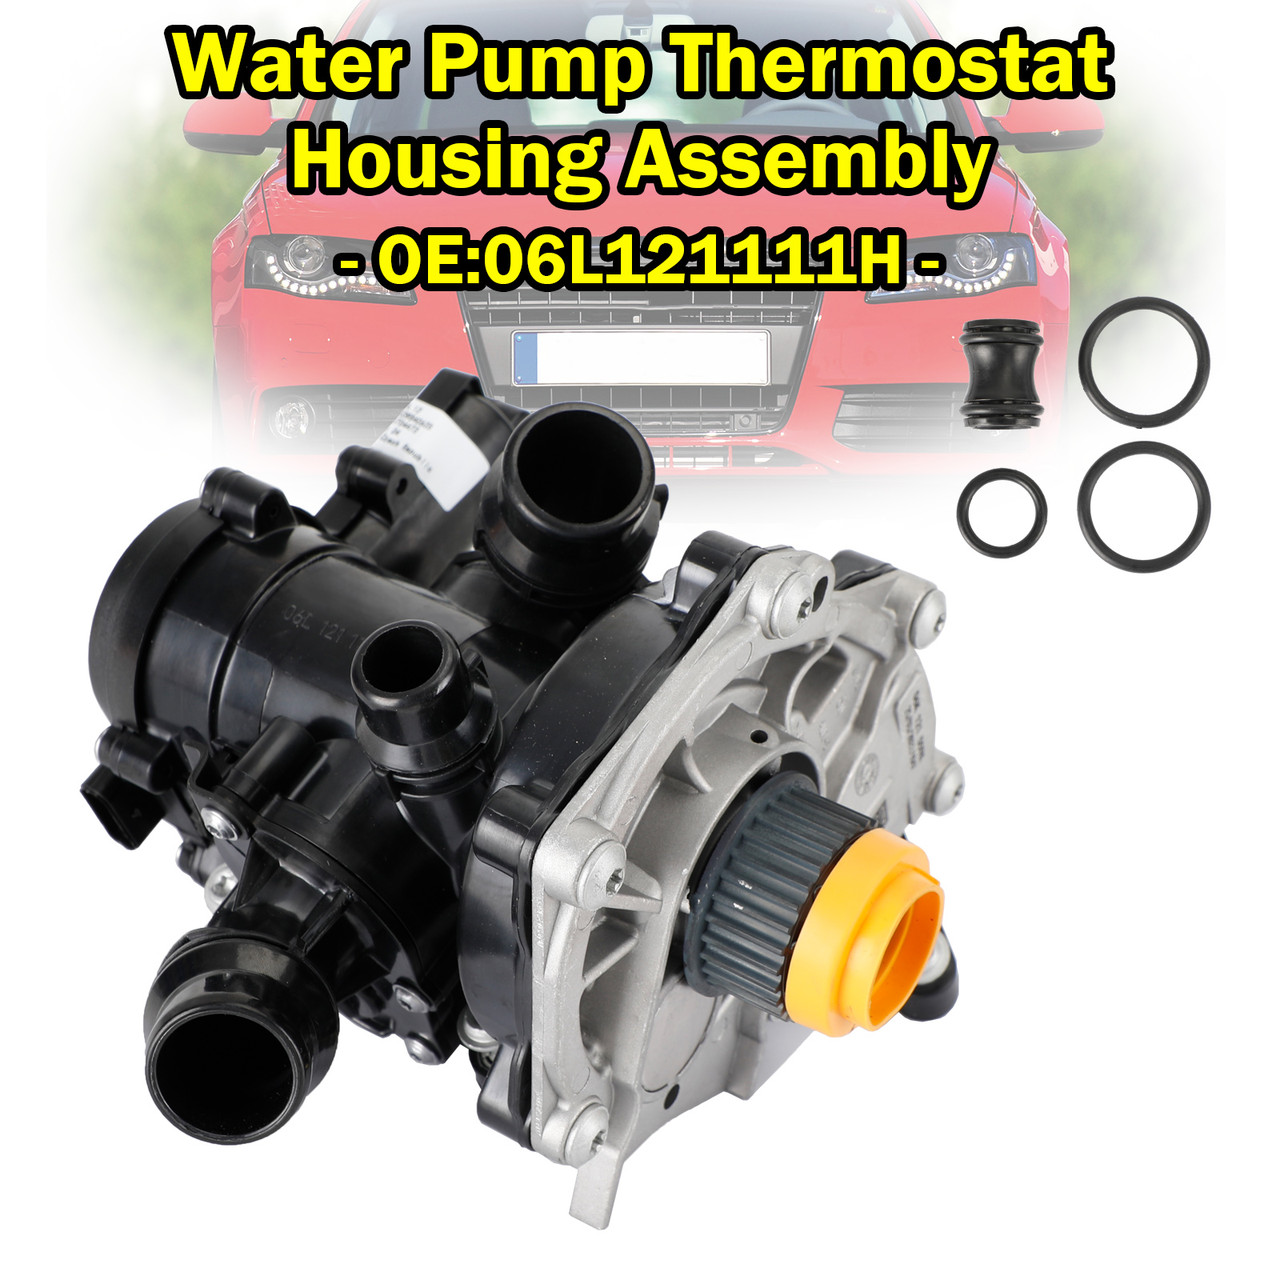 06L121111H 13-15 Audi A4 B8,8K2 Sedan 2.0 TFSI Water Pump Thermostat Housing Assembly Generic